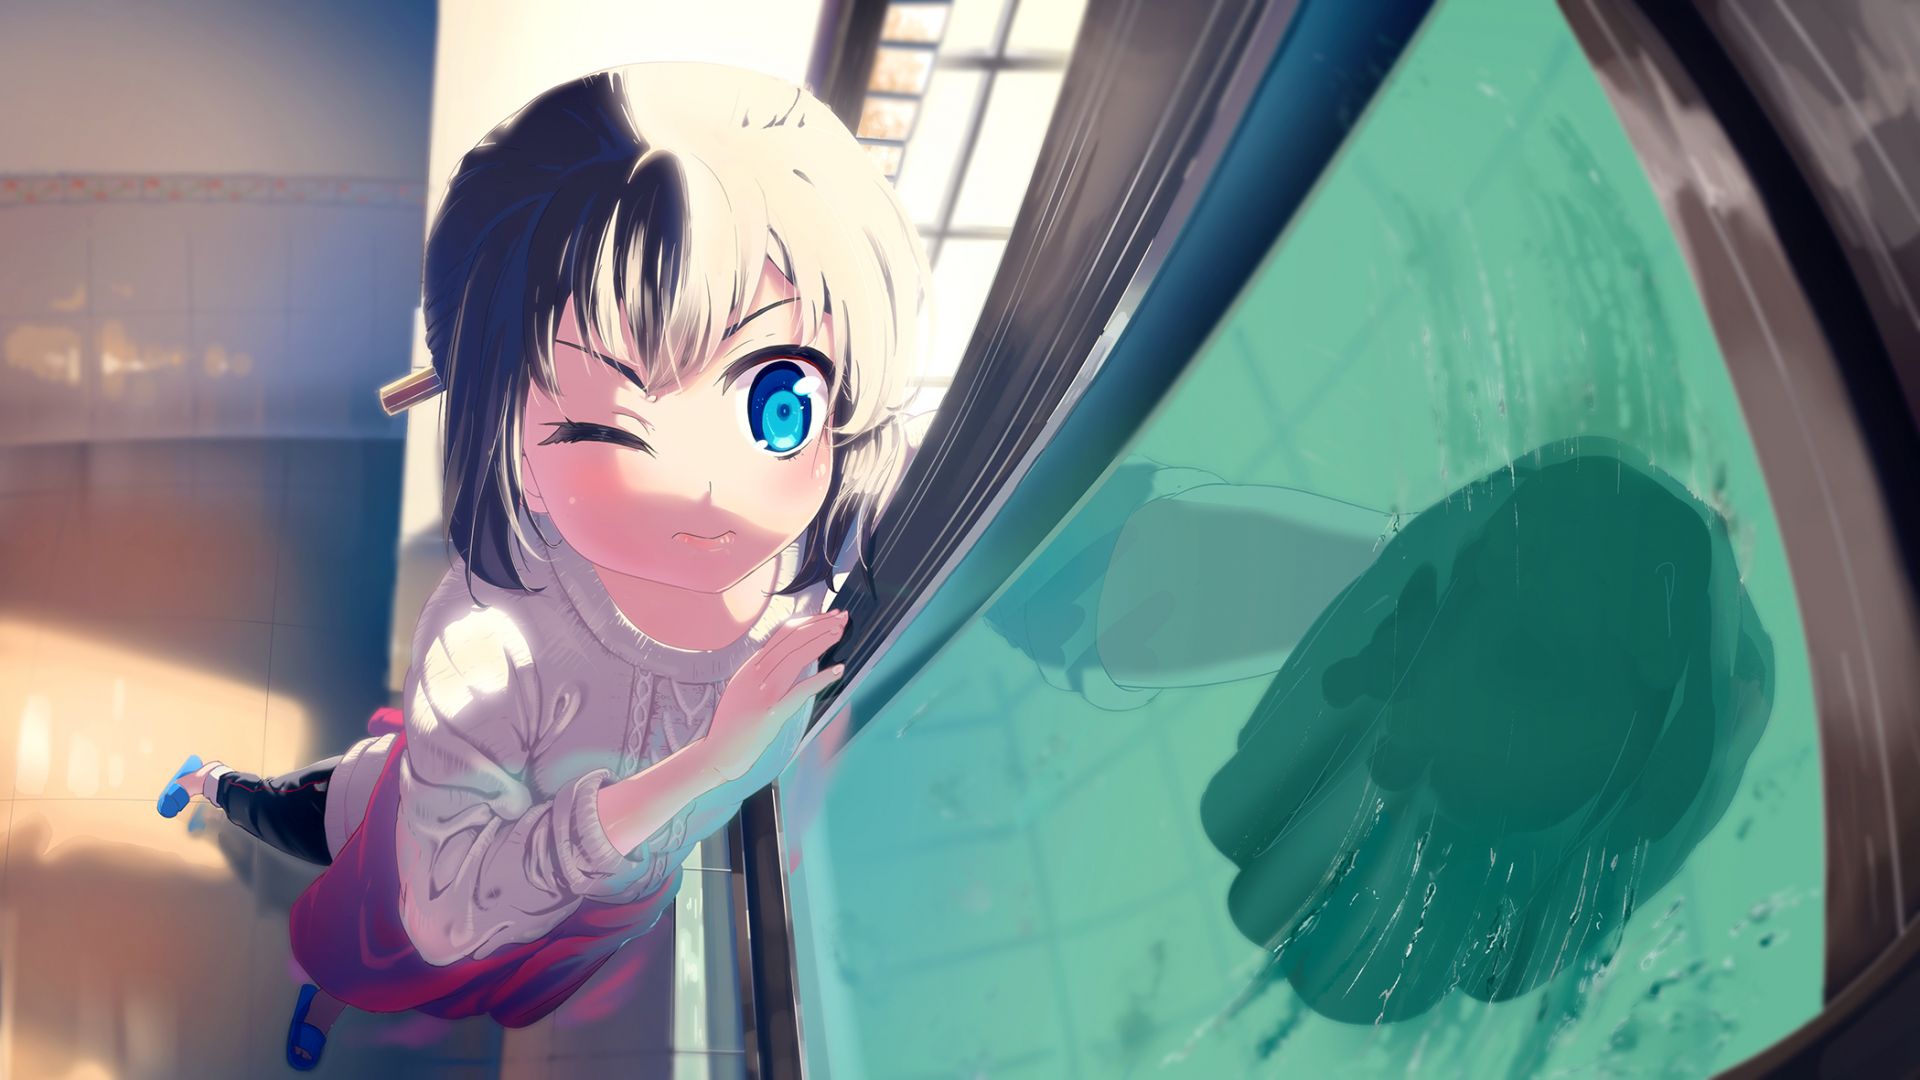 Wallpaper Washing window, anime girl, original